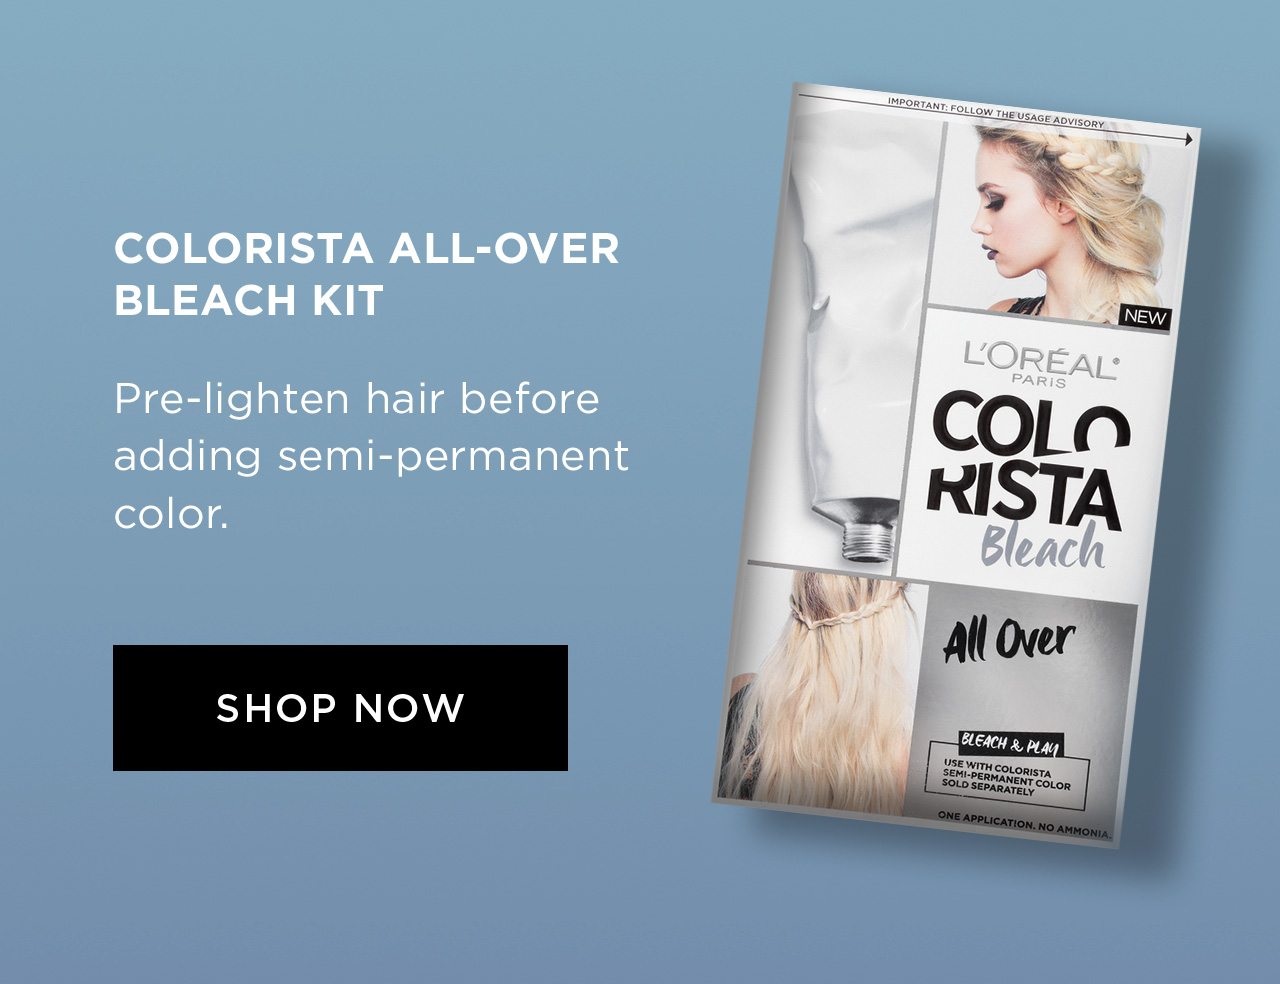 COLORISTA ALL-OVER BLEACH KIT - Pre-lighten hair before adding semi-permanent color. - SHOP NOW